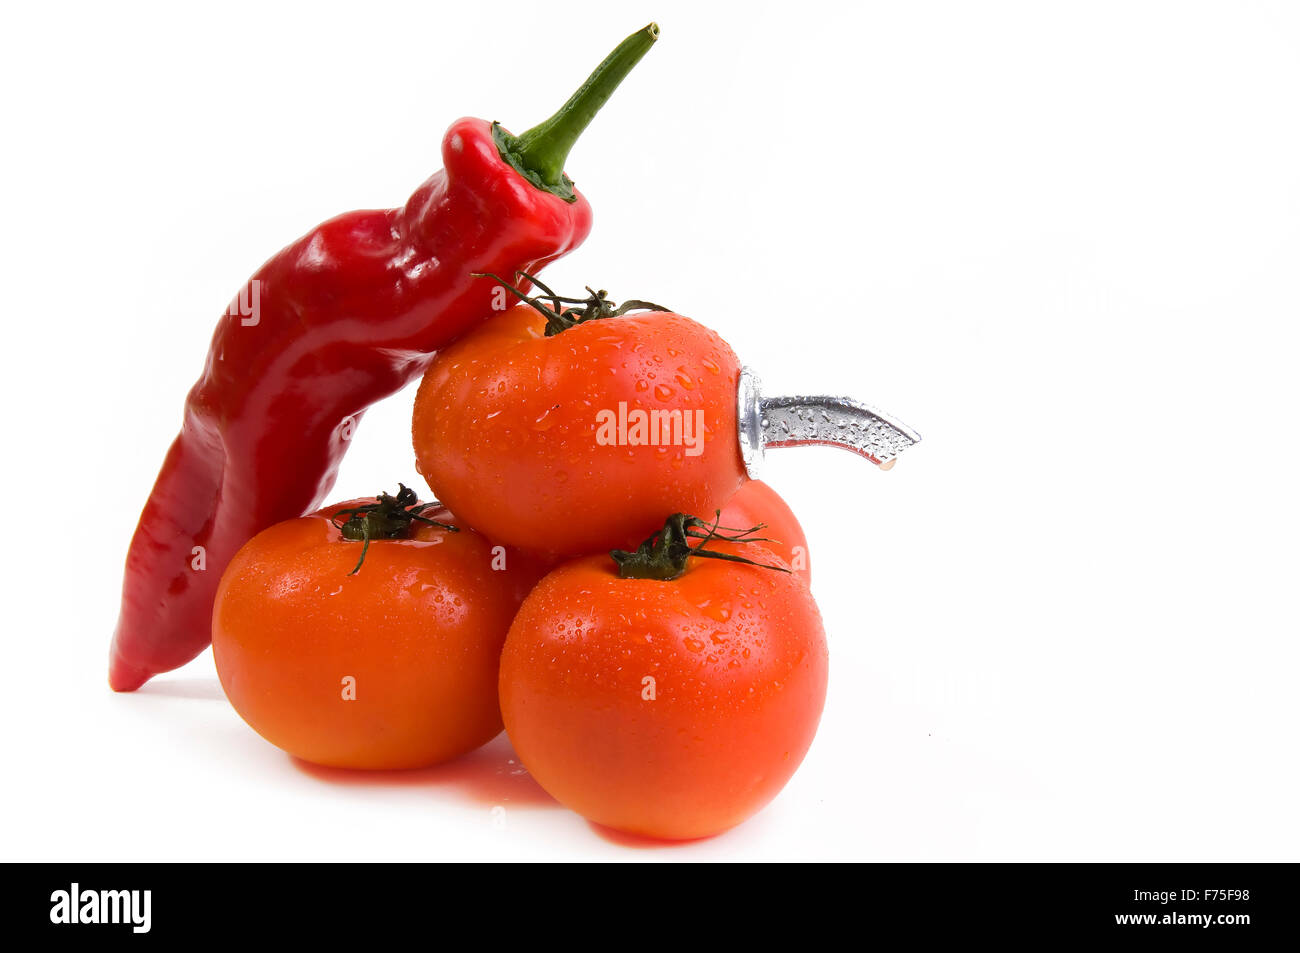 Hot tomato jucie distributor Stock Photo